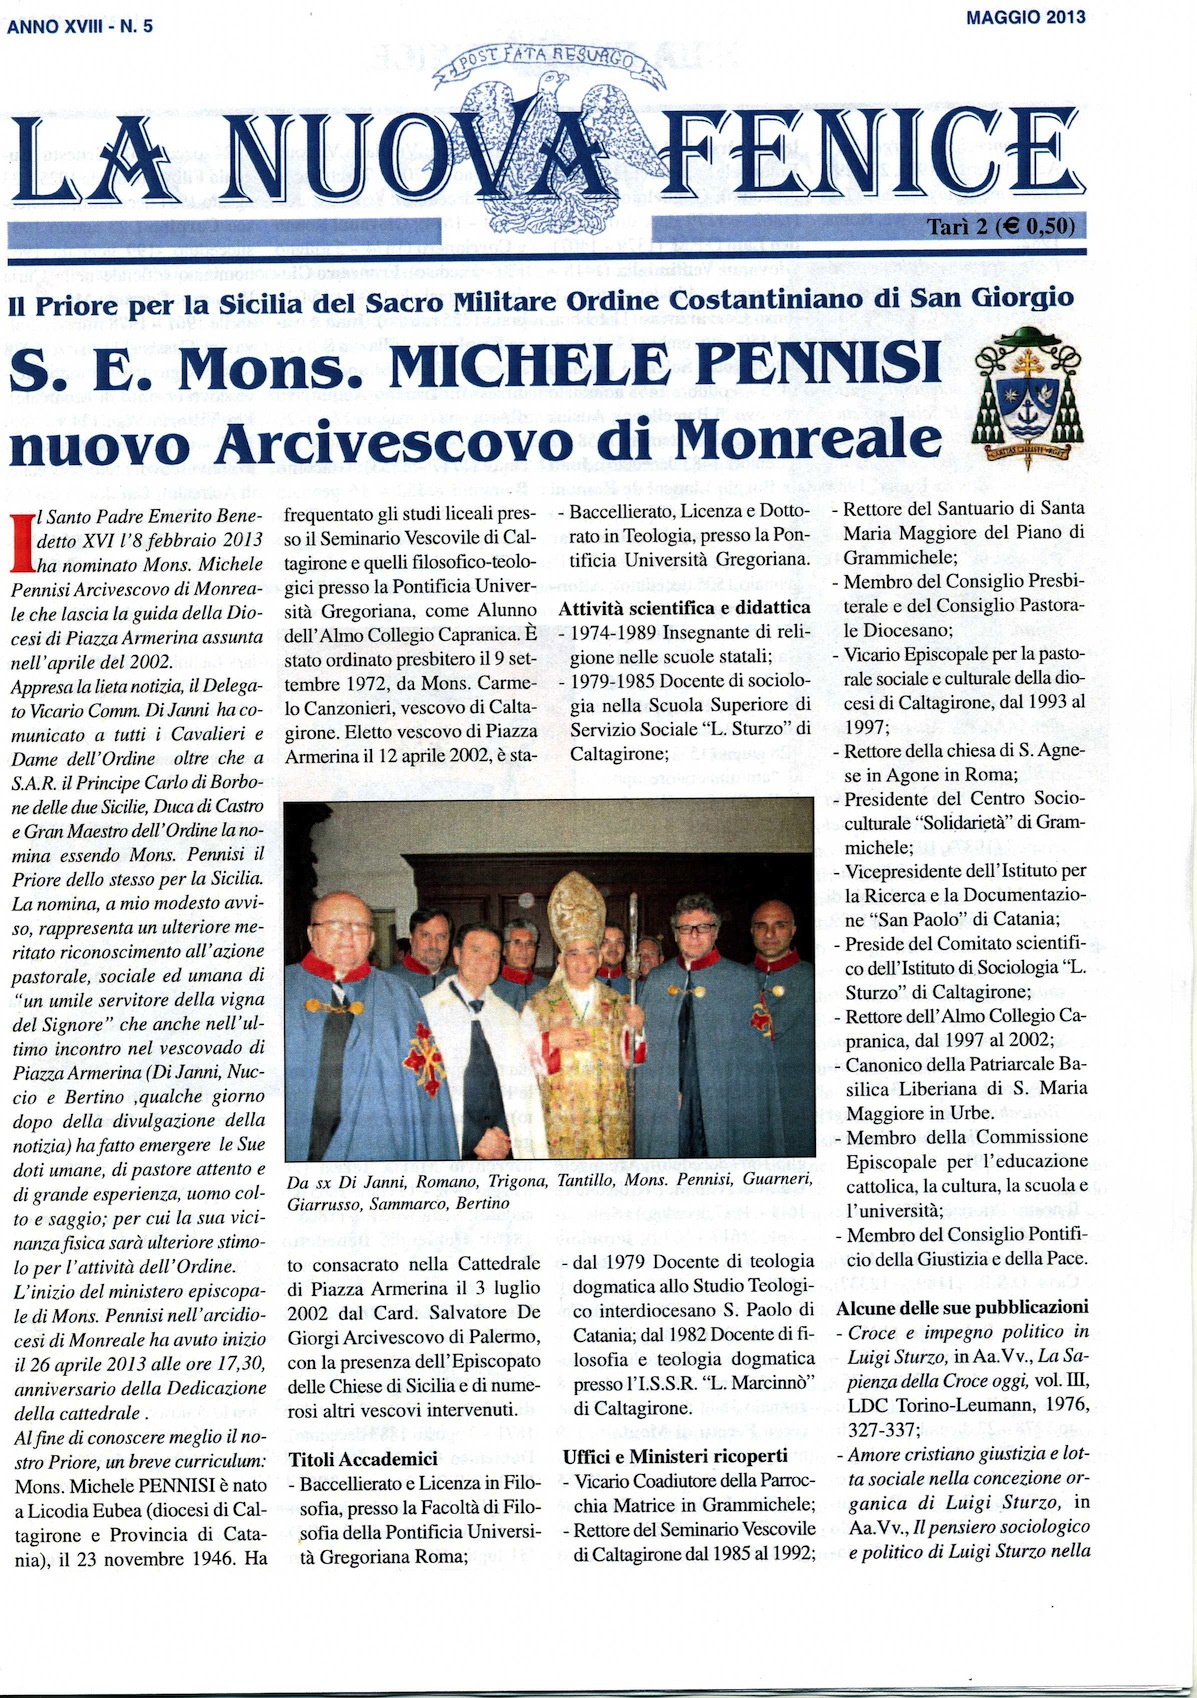 cerimonia Duomo di Monreale (1) copy